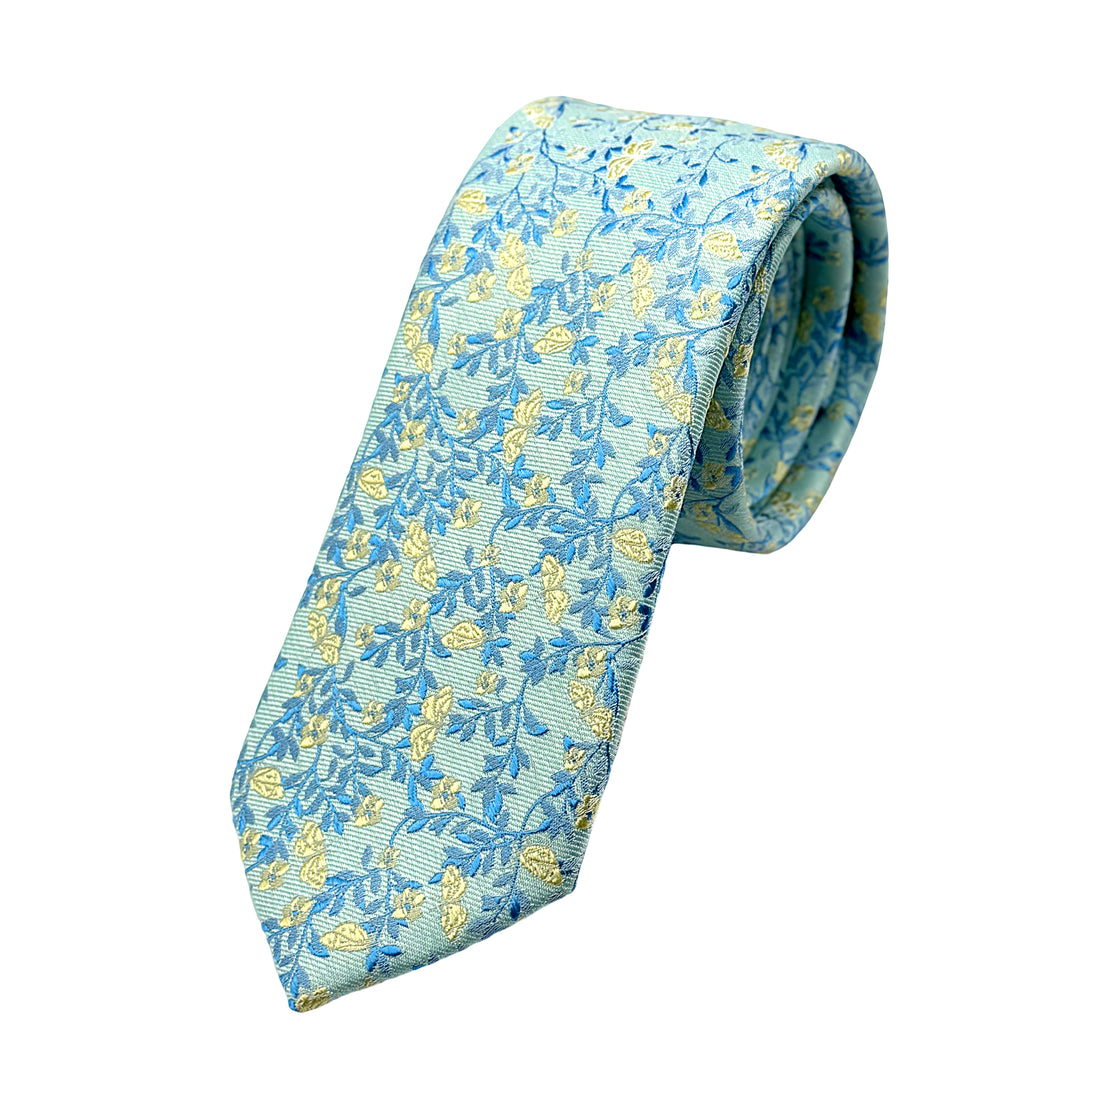 James Adelin Mens Luxury Microfibre Neck Tie in Textured Weave Floral Design